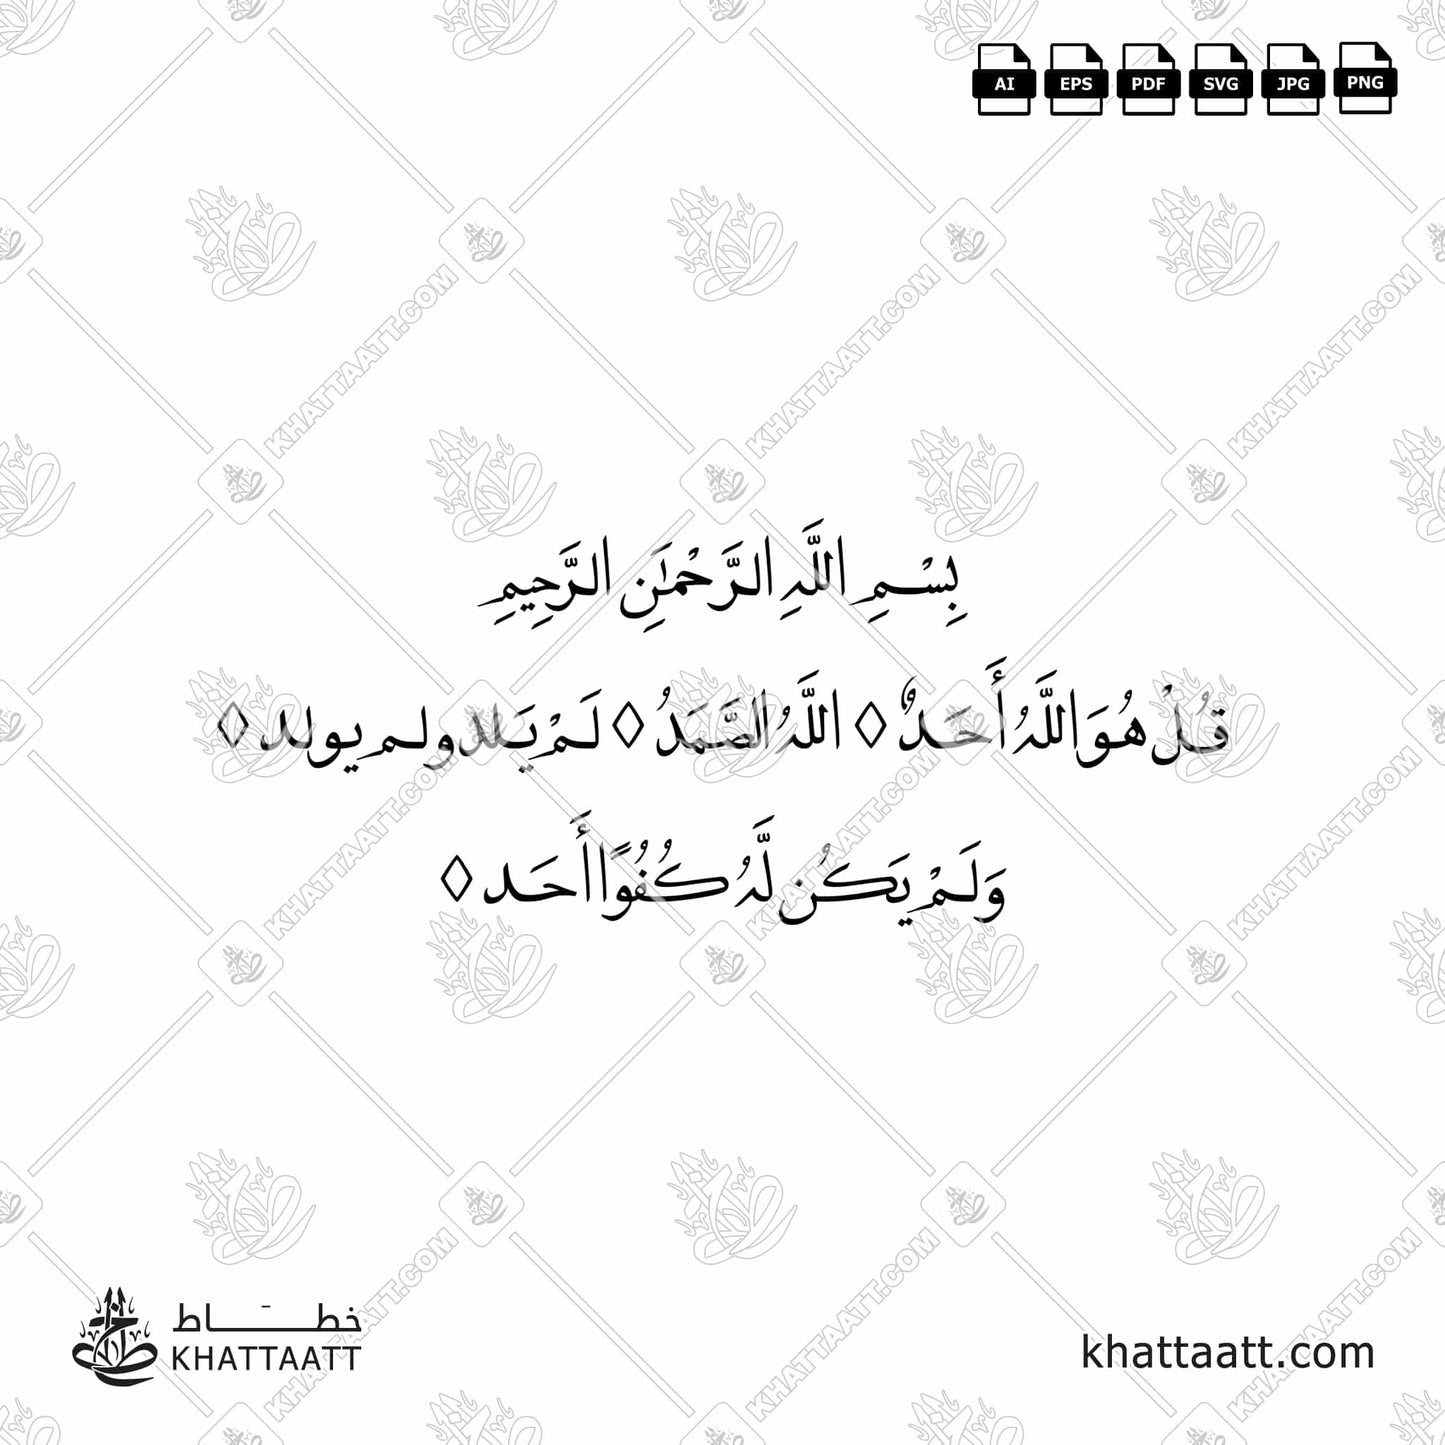 Arabic Calligraphy of Surat Al-Ikhlas سورة الإخلاص in Farsi Naskh Script خط النسخ الفارسي.